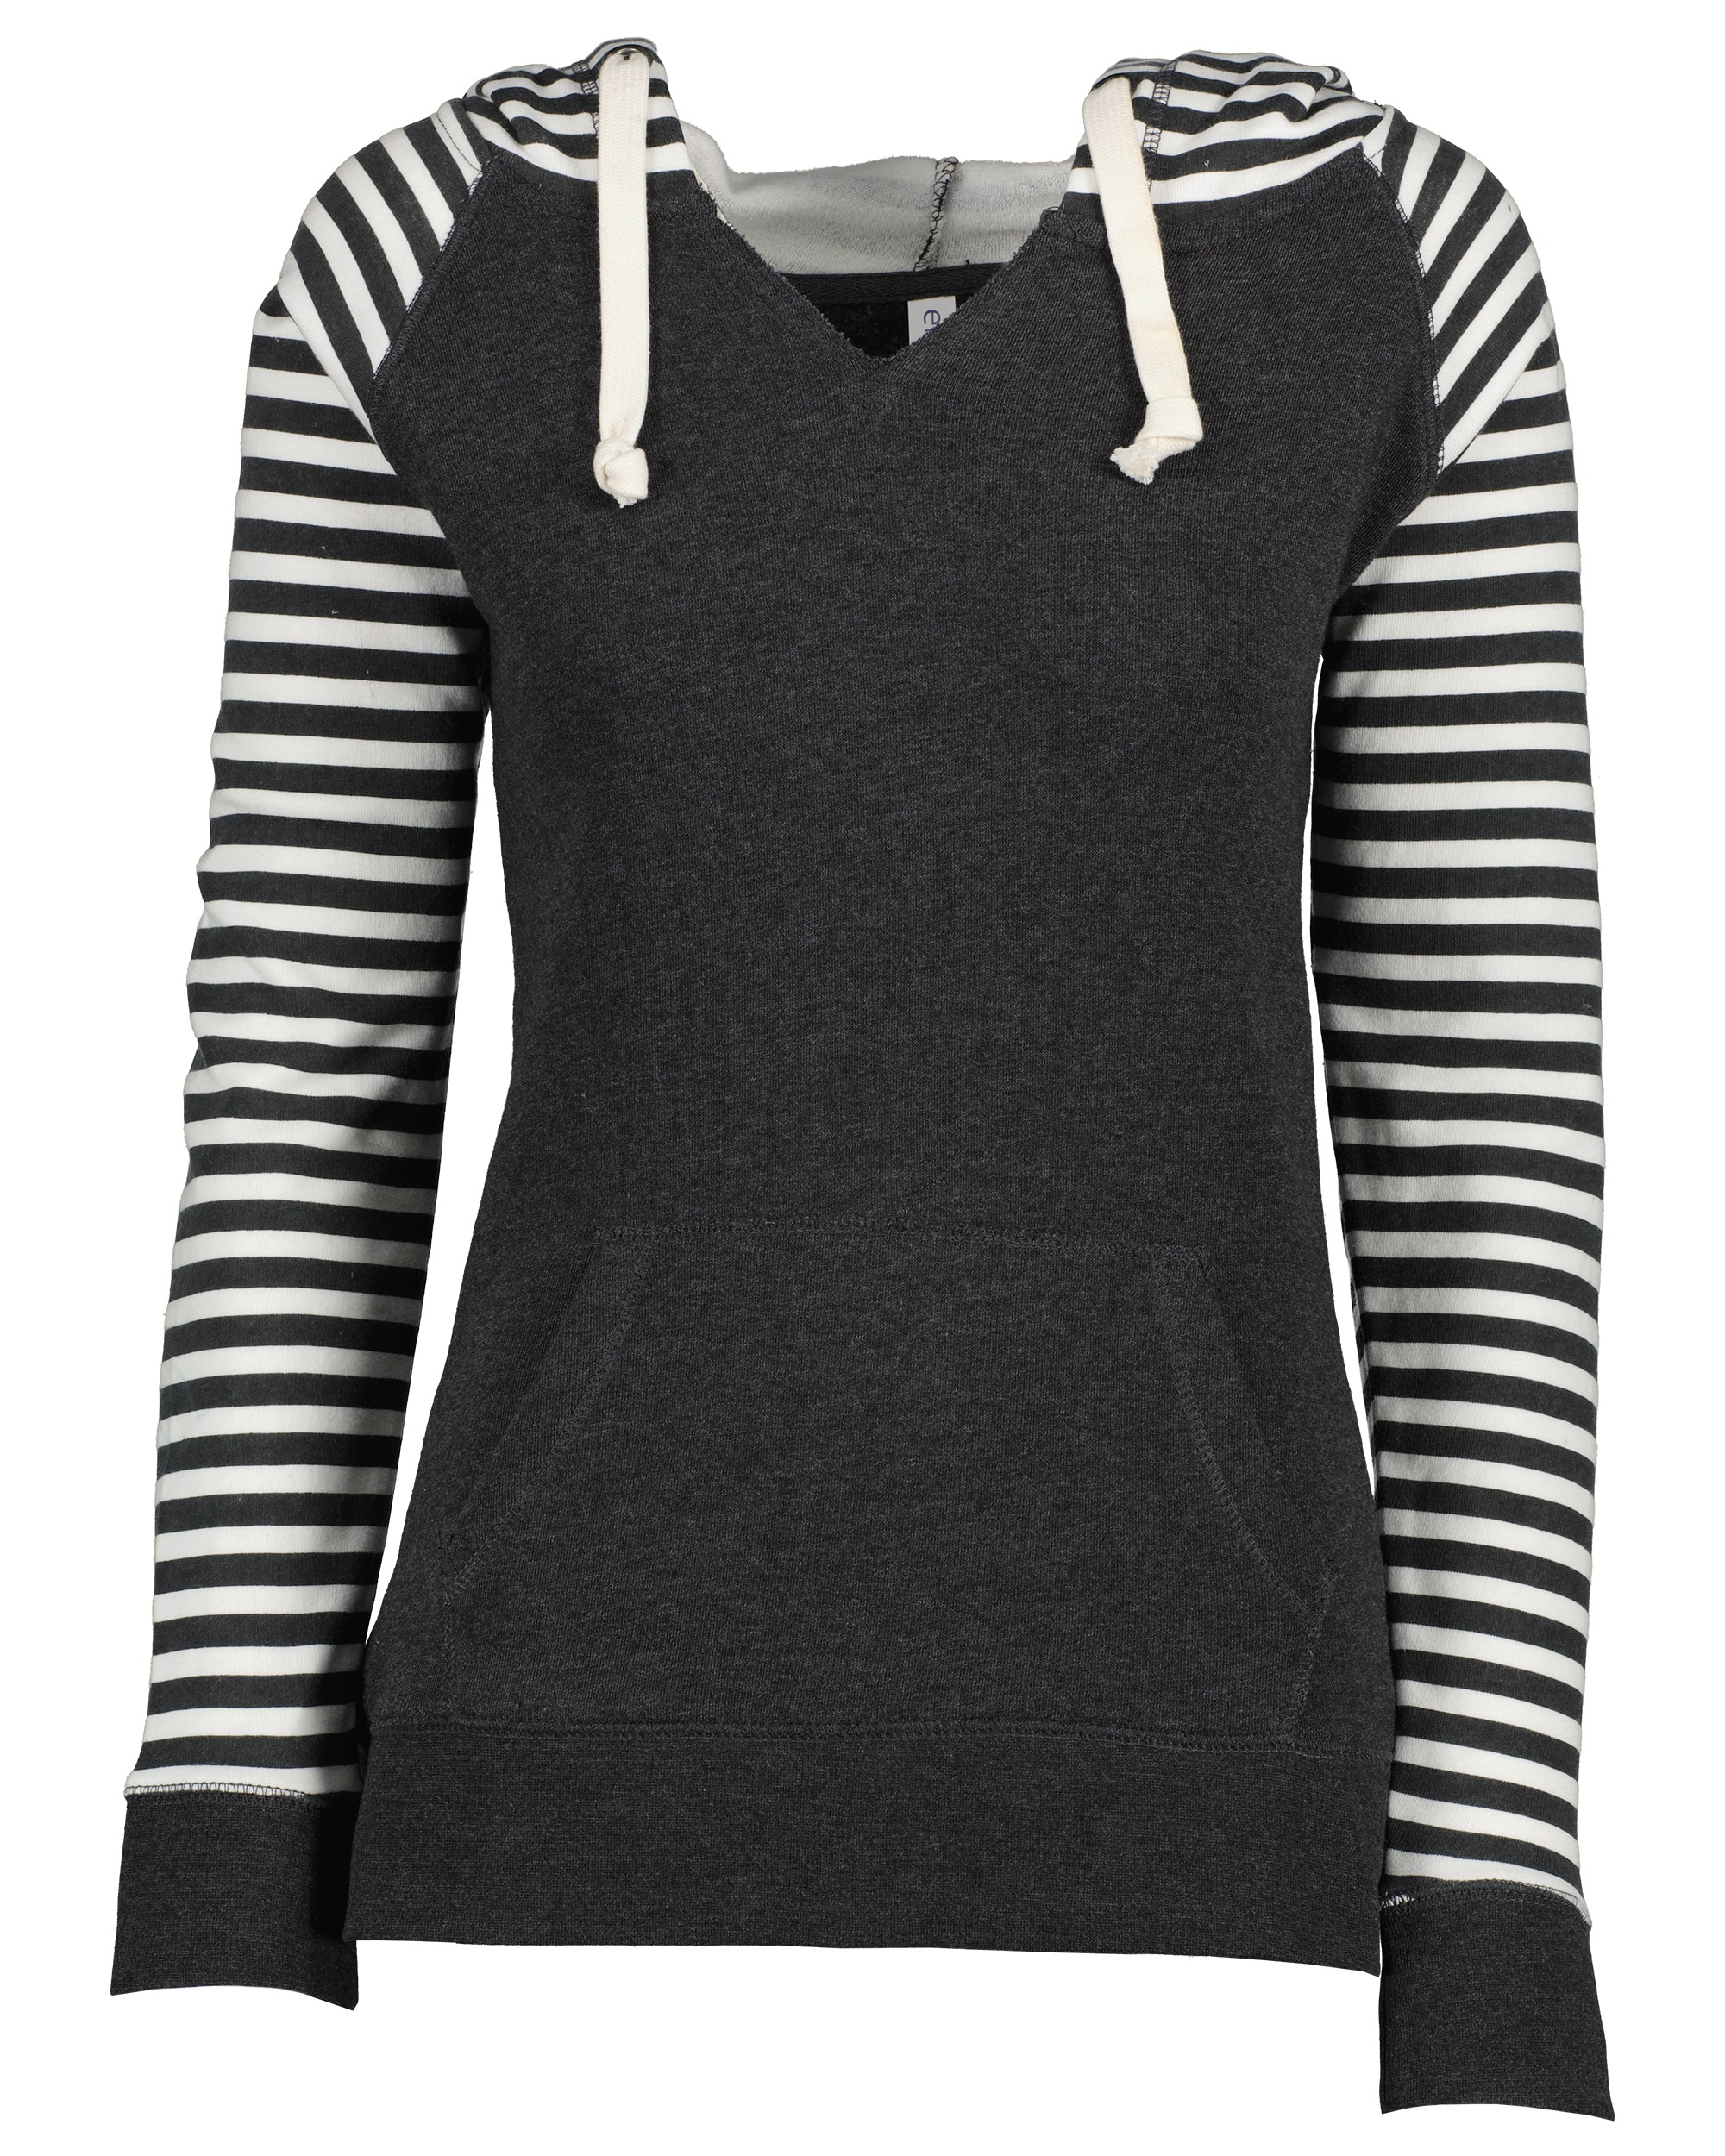 Enza® 37579 Ladies Stripe Chalk Fleece Pullover Hood